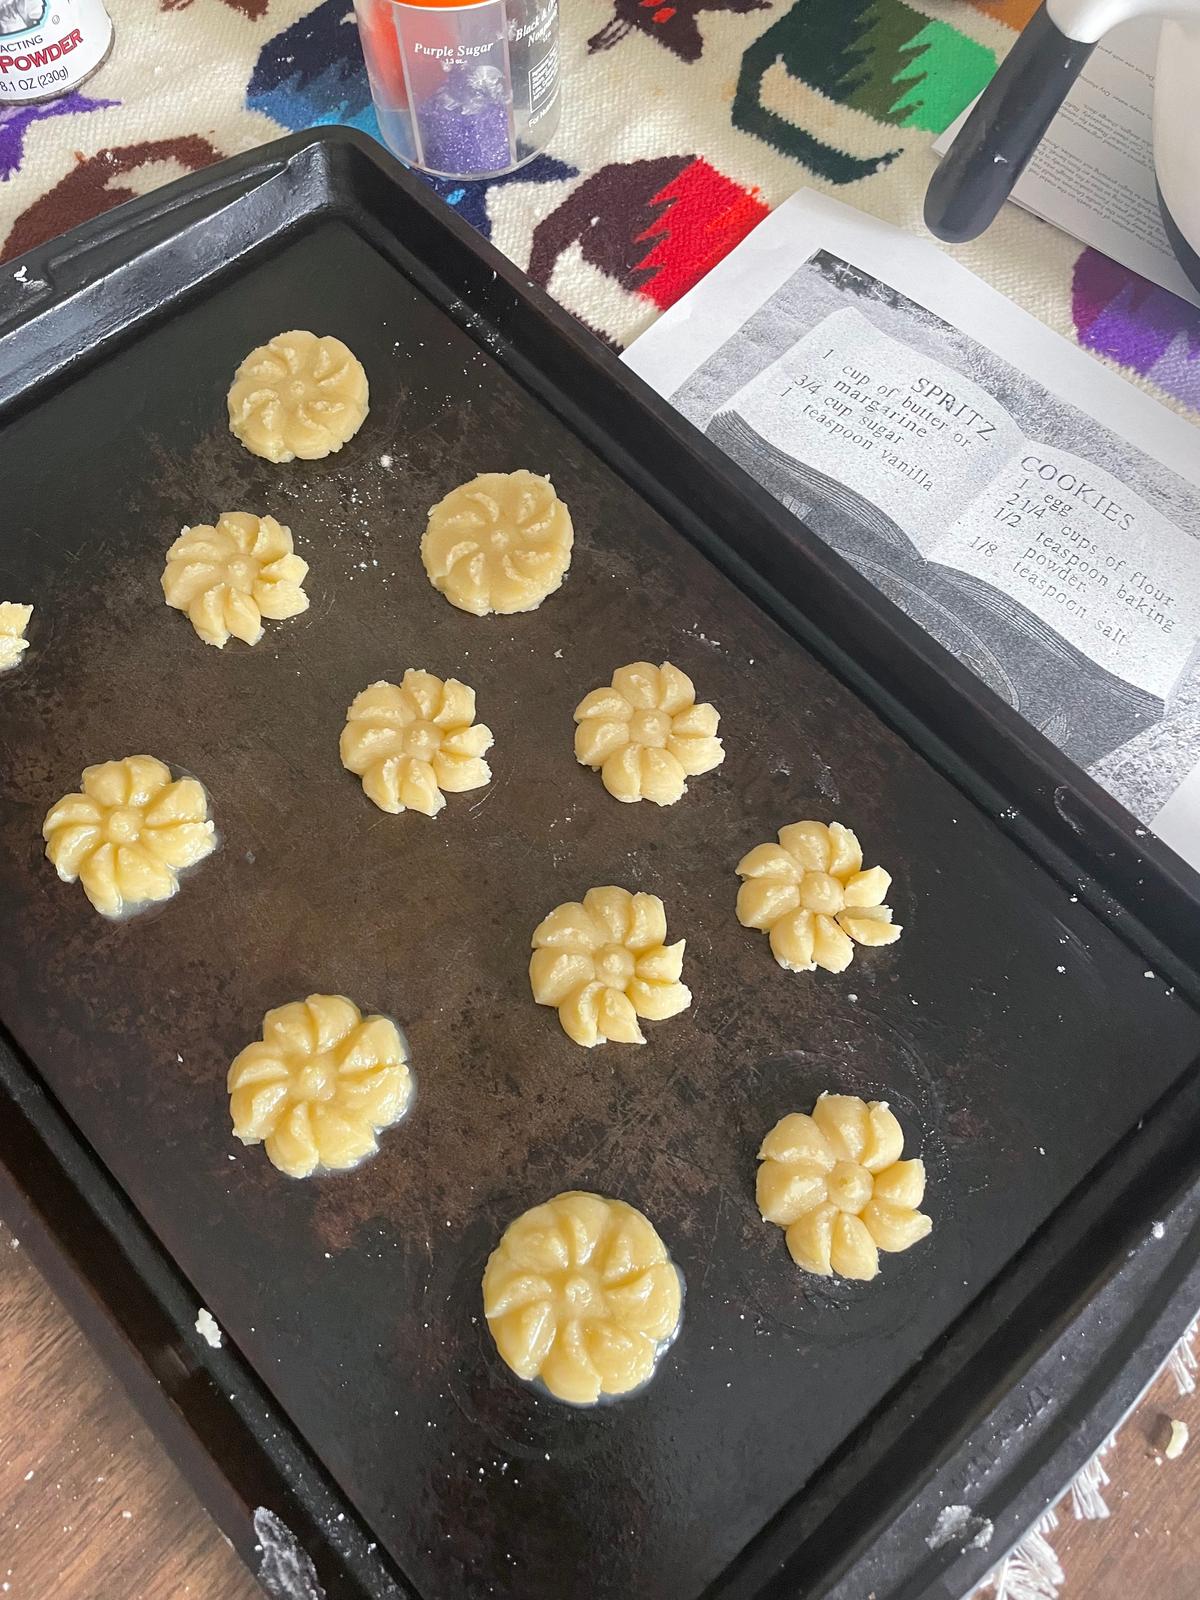 Rosie Grant makes cookies. (Courtesy of Rosie Grant)